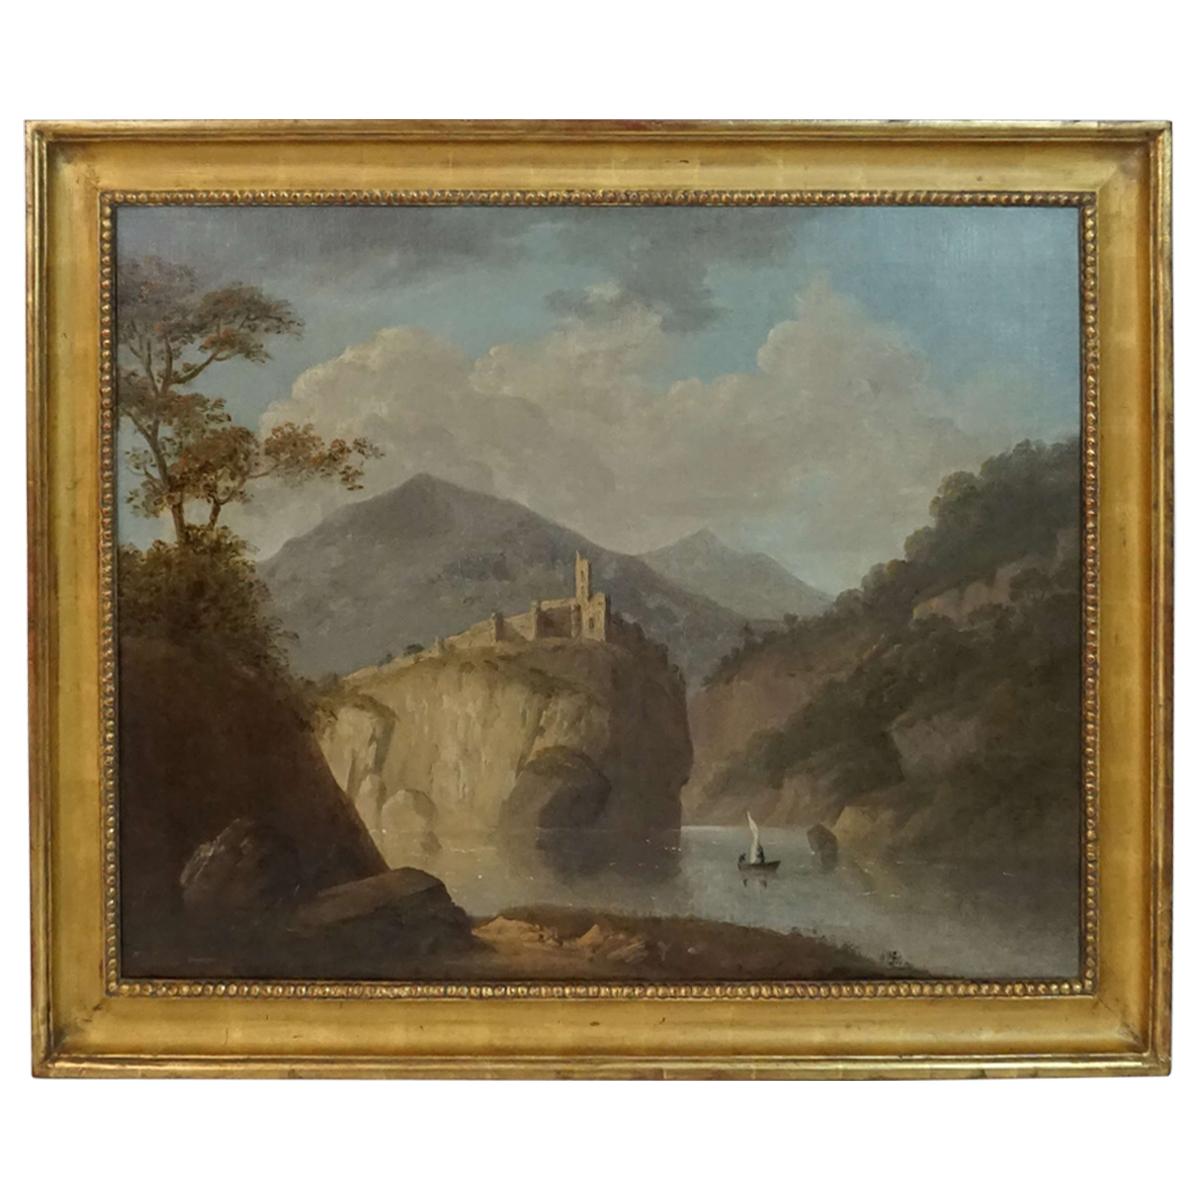 Robert Freebairn Welsh Snowdonia Landscape Painting, circa 1795